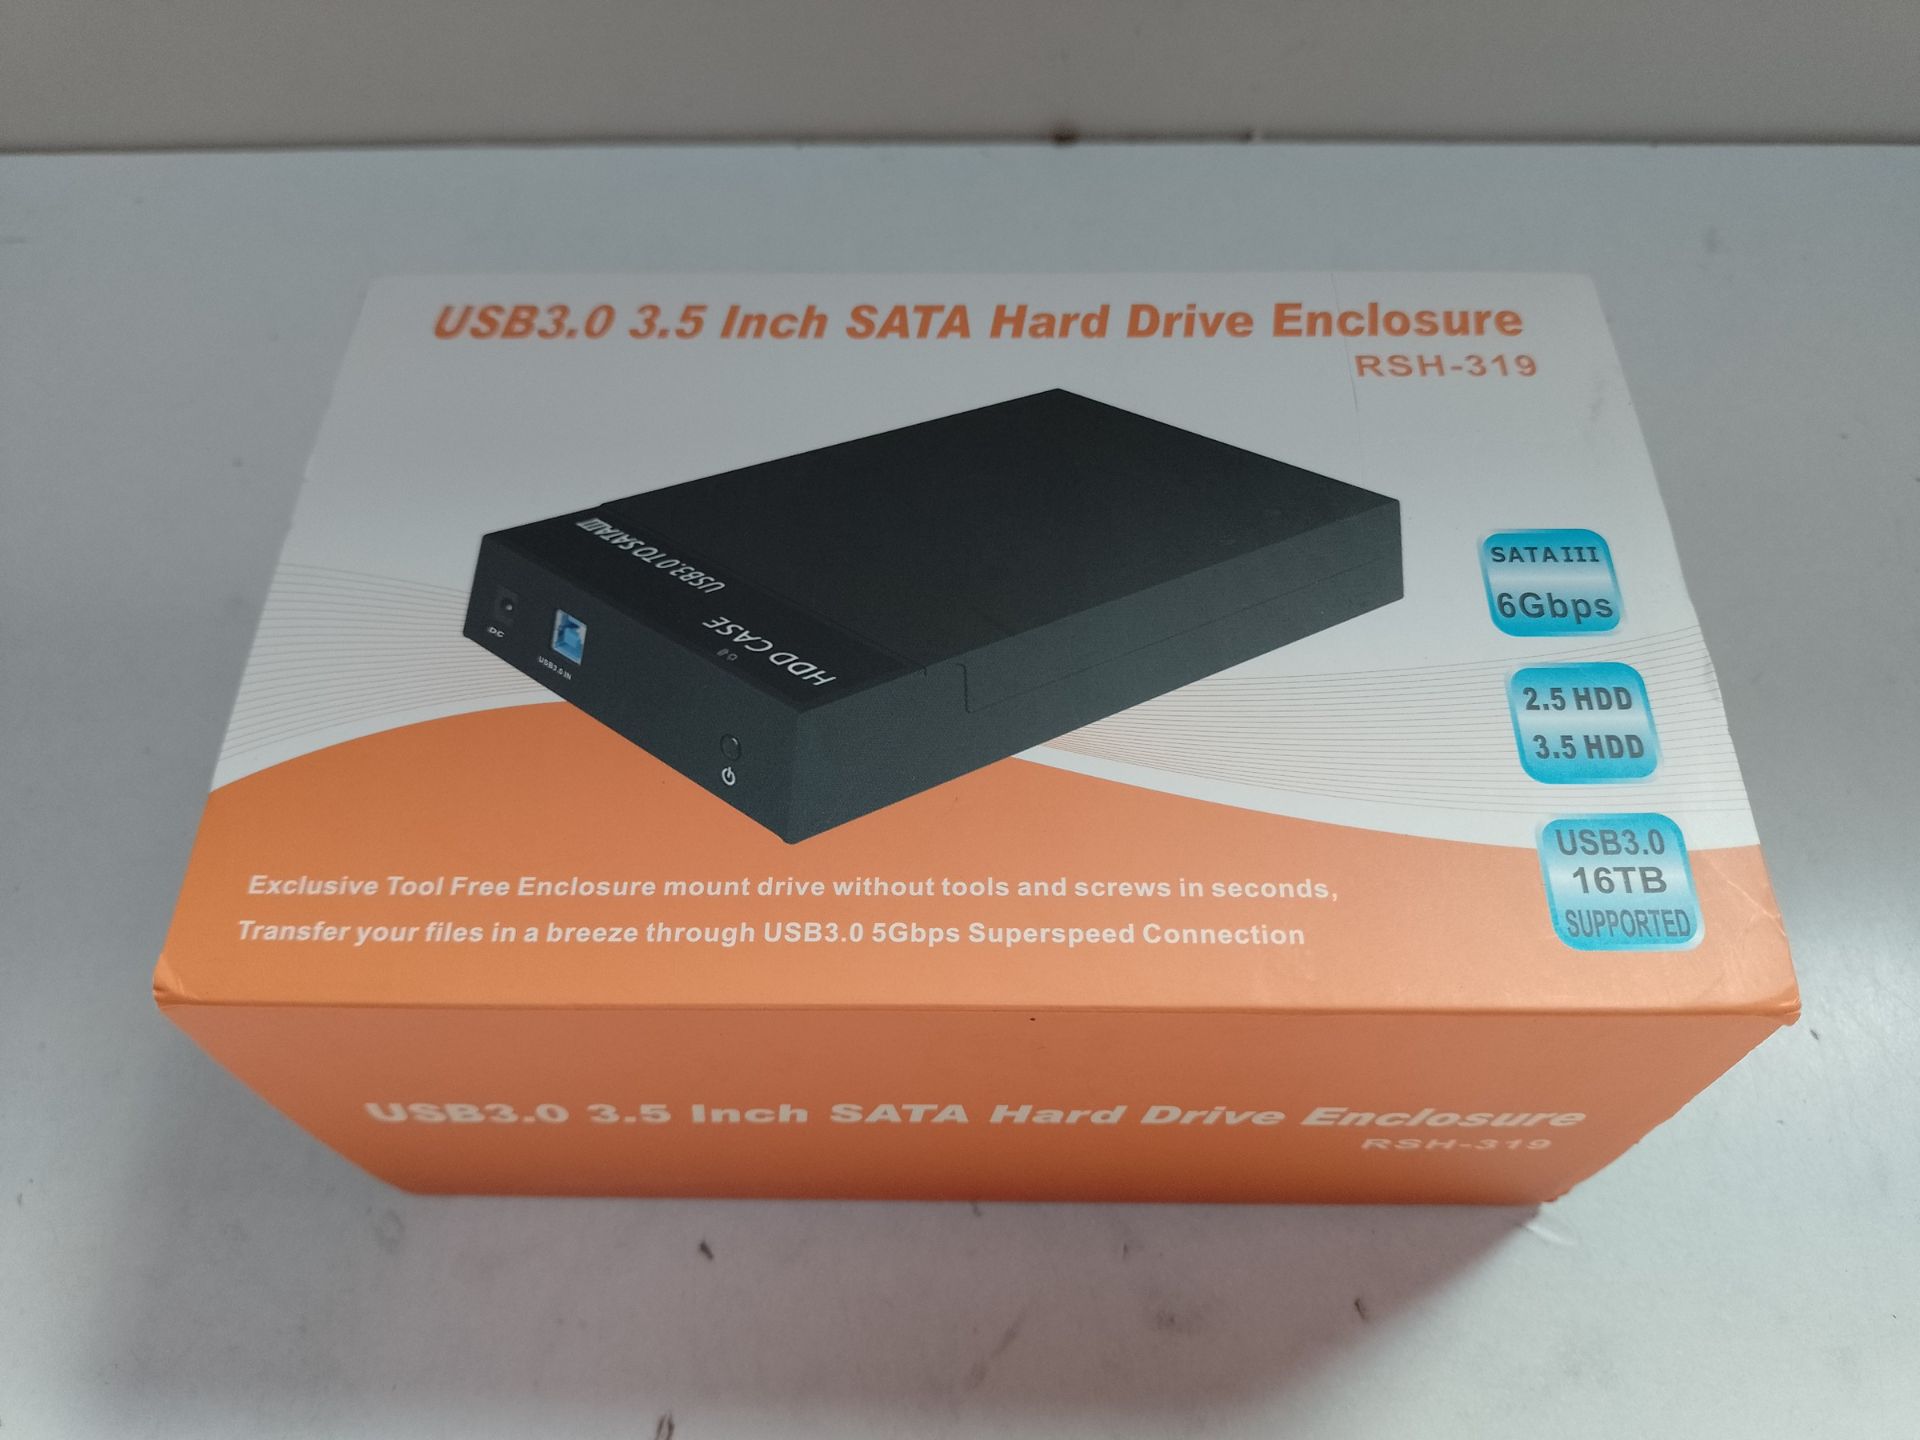 RRP £22.82 RSHTECH USB 3.0 External Hard Drive Enclosure HDD Caddy - Image 2 of 2